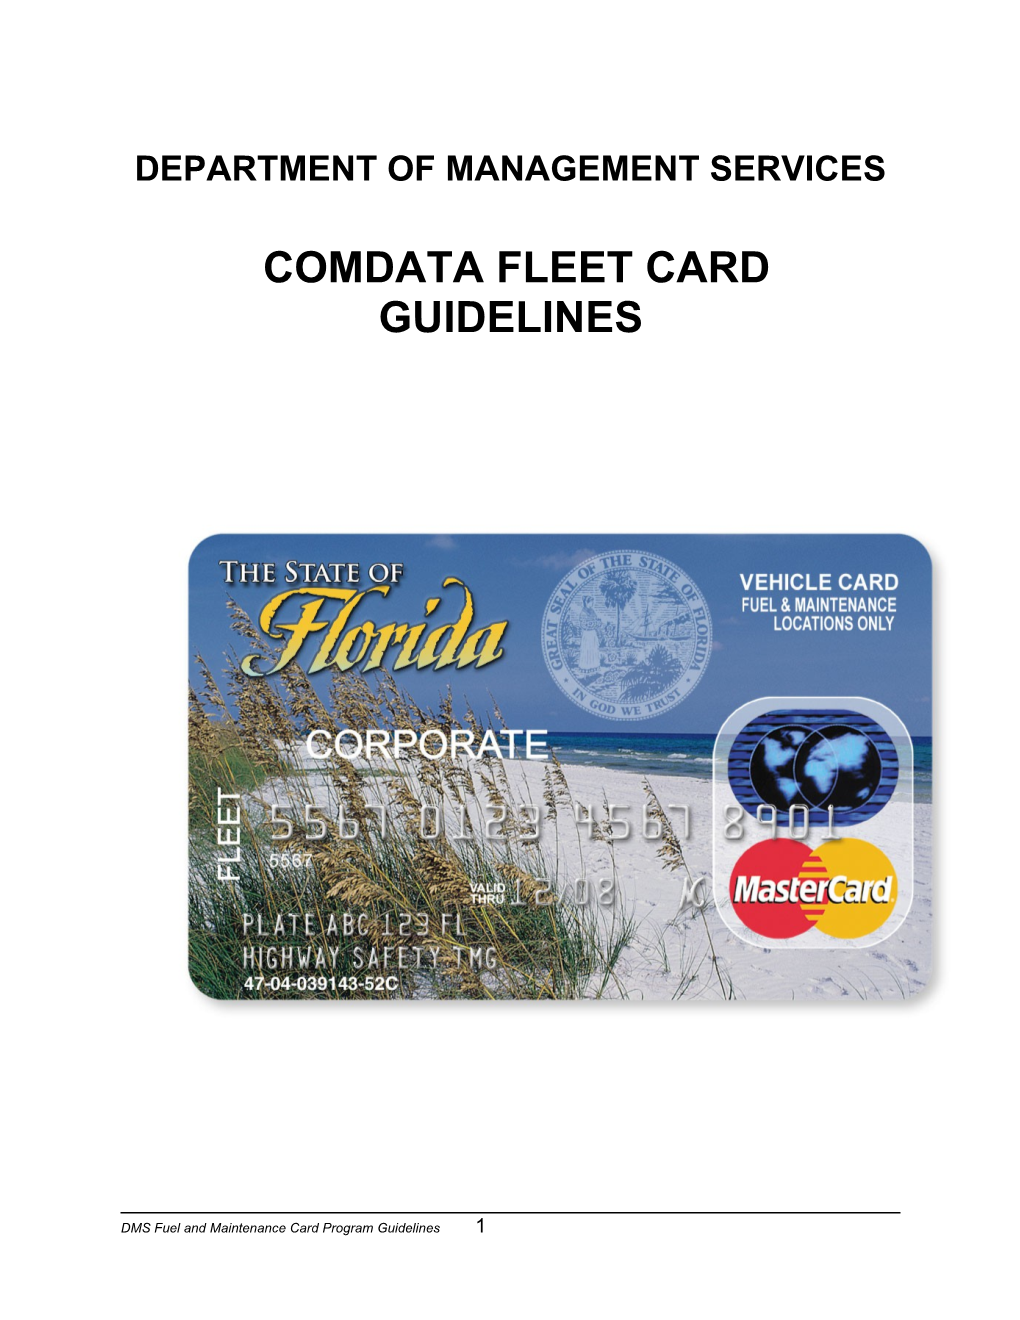 Comdata Fleet Card Guidelines